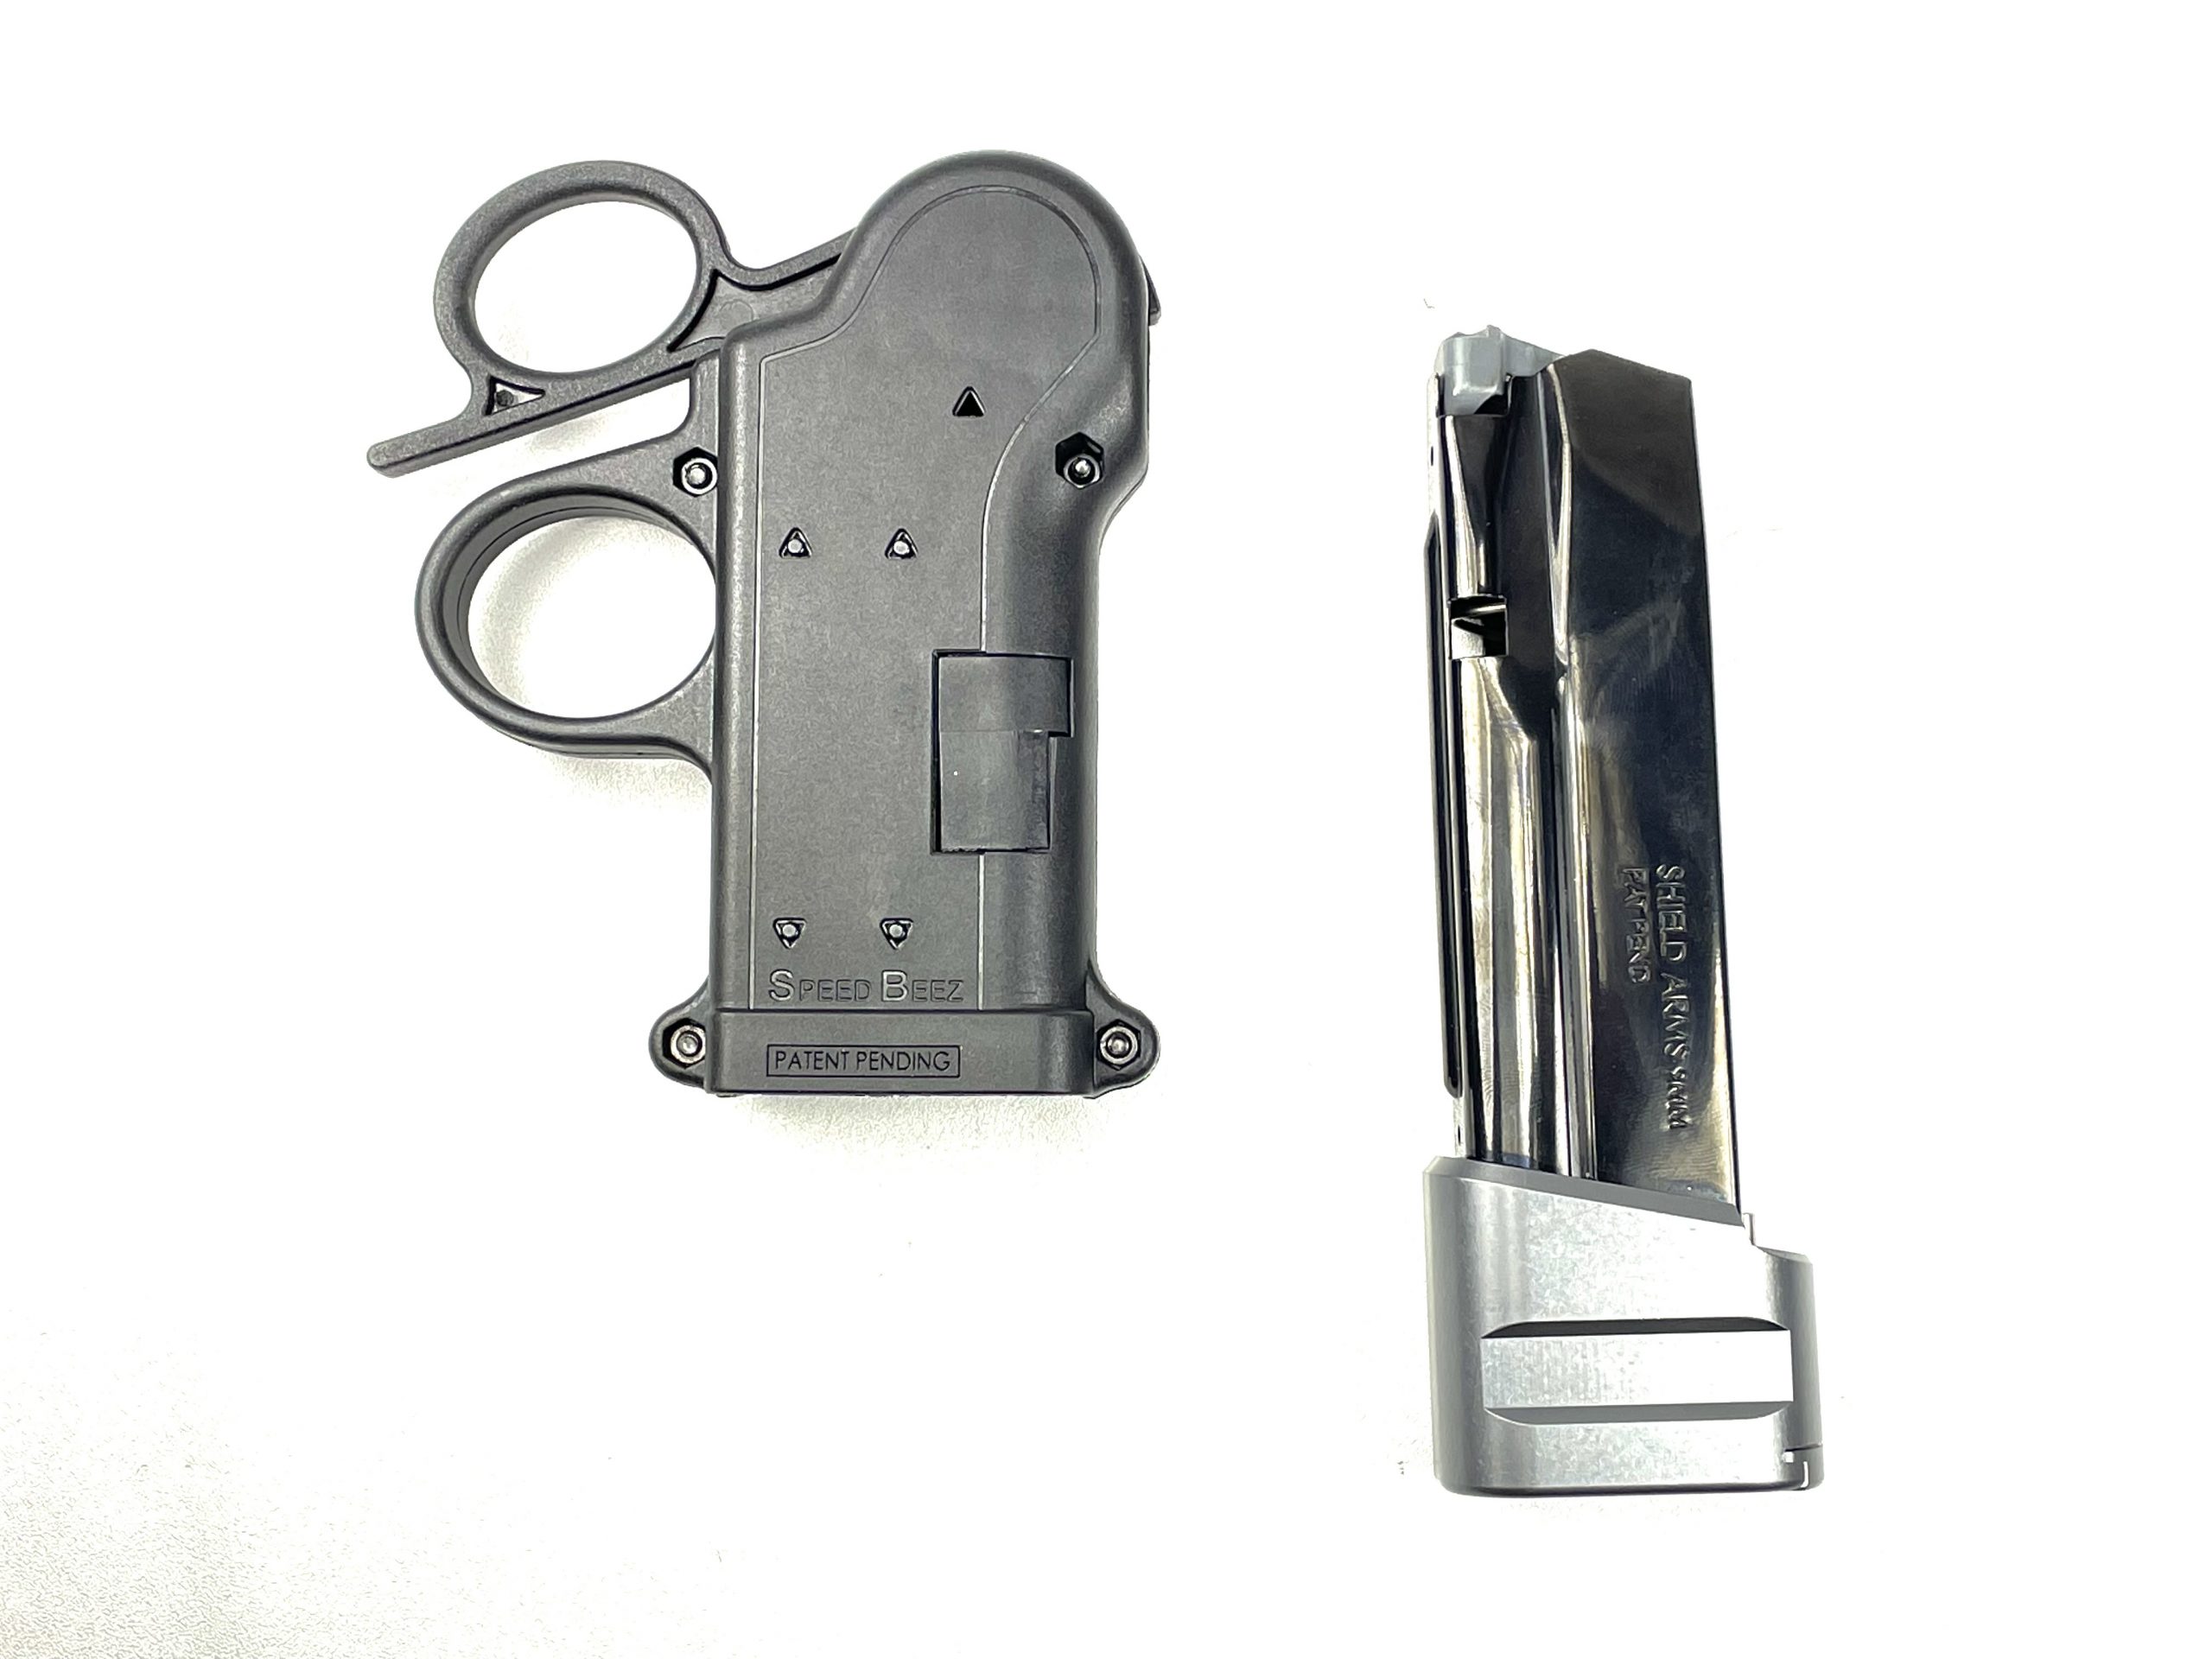 NEW RangeTray Range Tray Magazine Loader SpeedLoader for Glock 43 9mm HOT PINK 